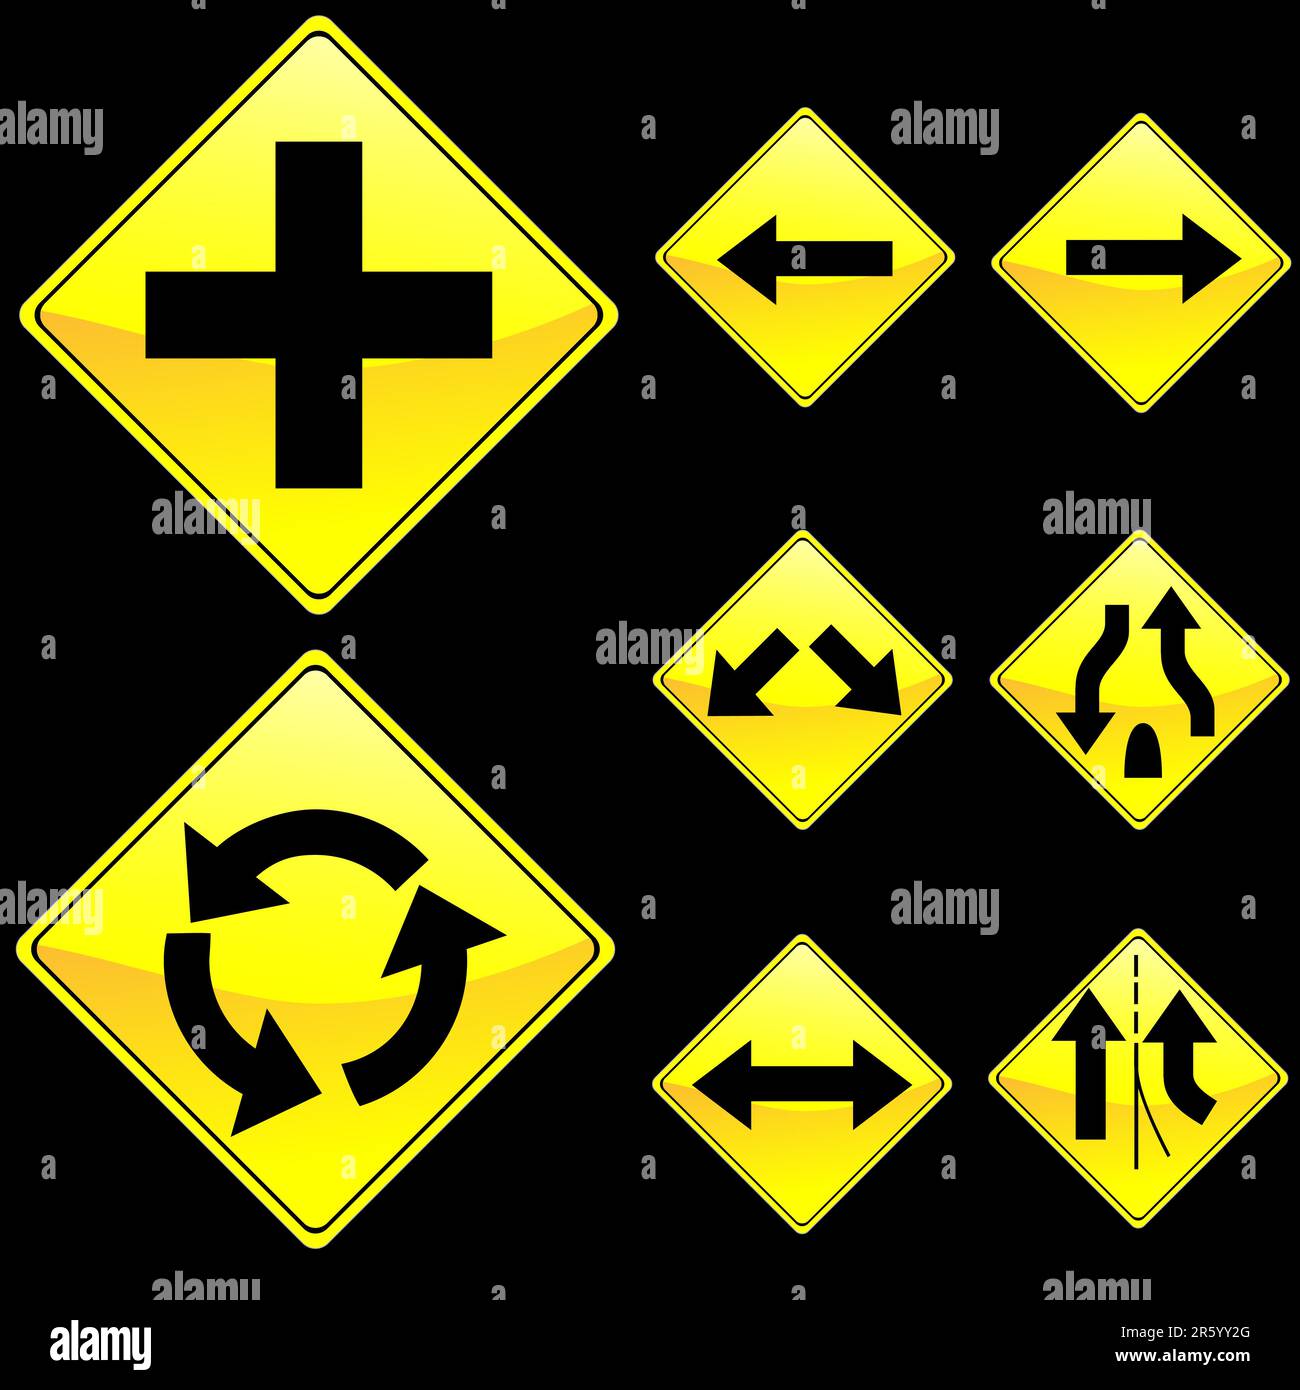 Vector Illustration of Eight Diamond Shape Yellow Road Signs Set 2 Stock Vector